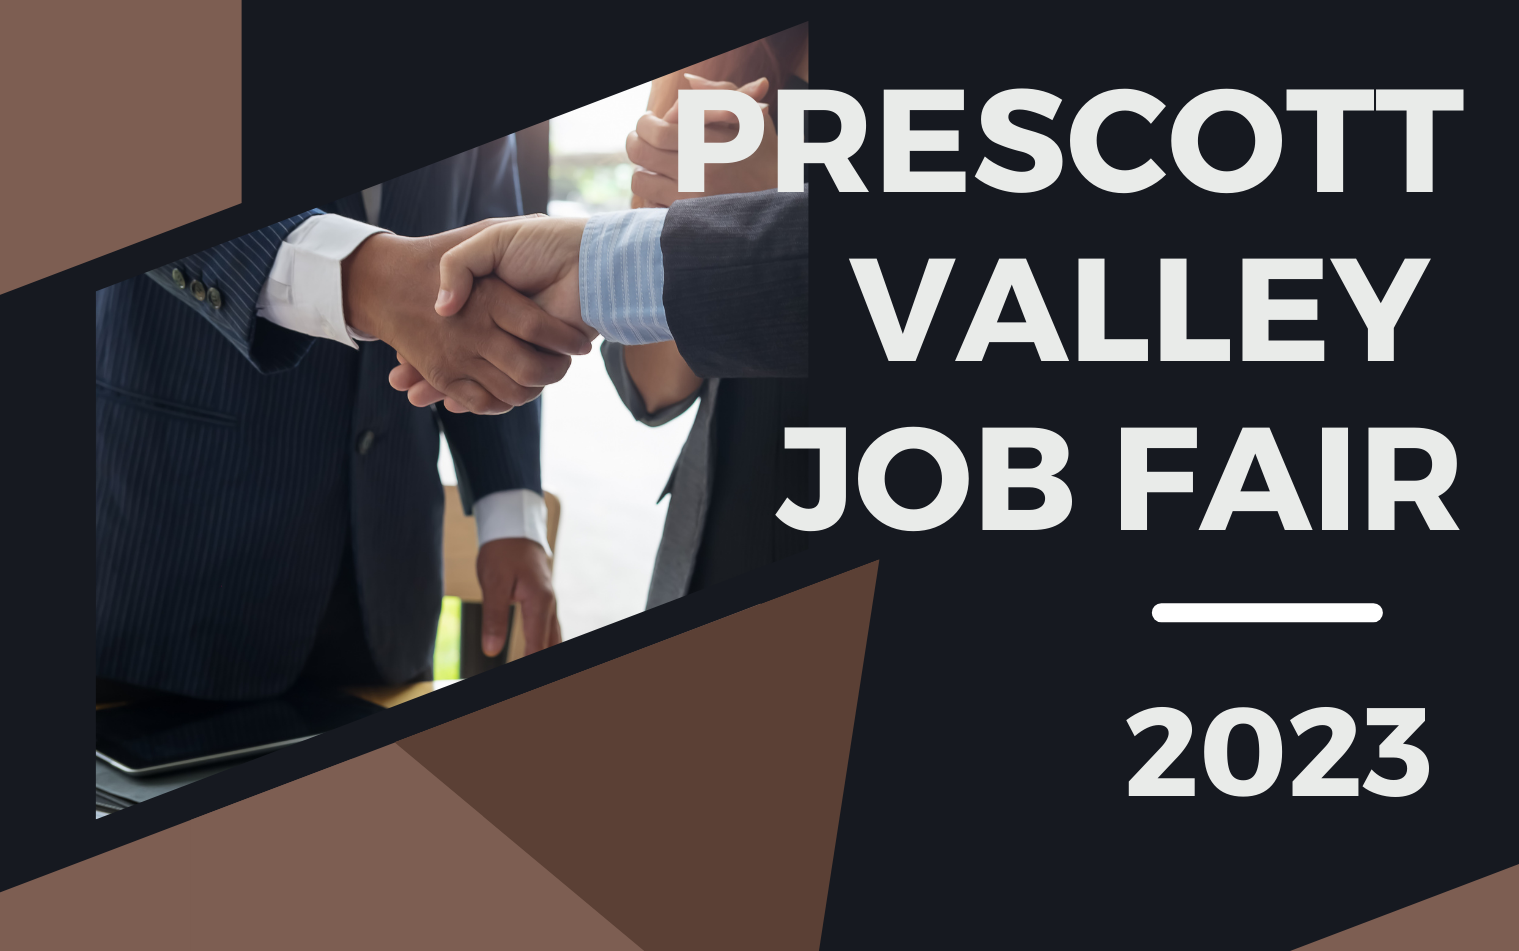 Save the Date - Prescott Valley Job Fair